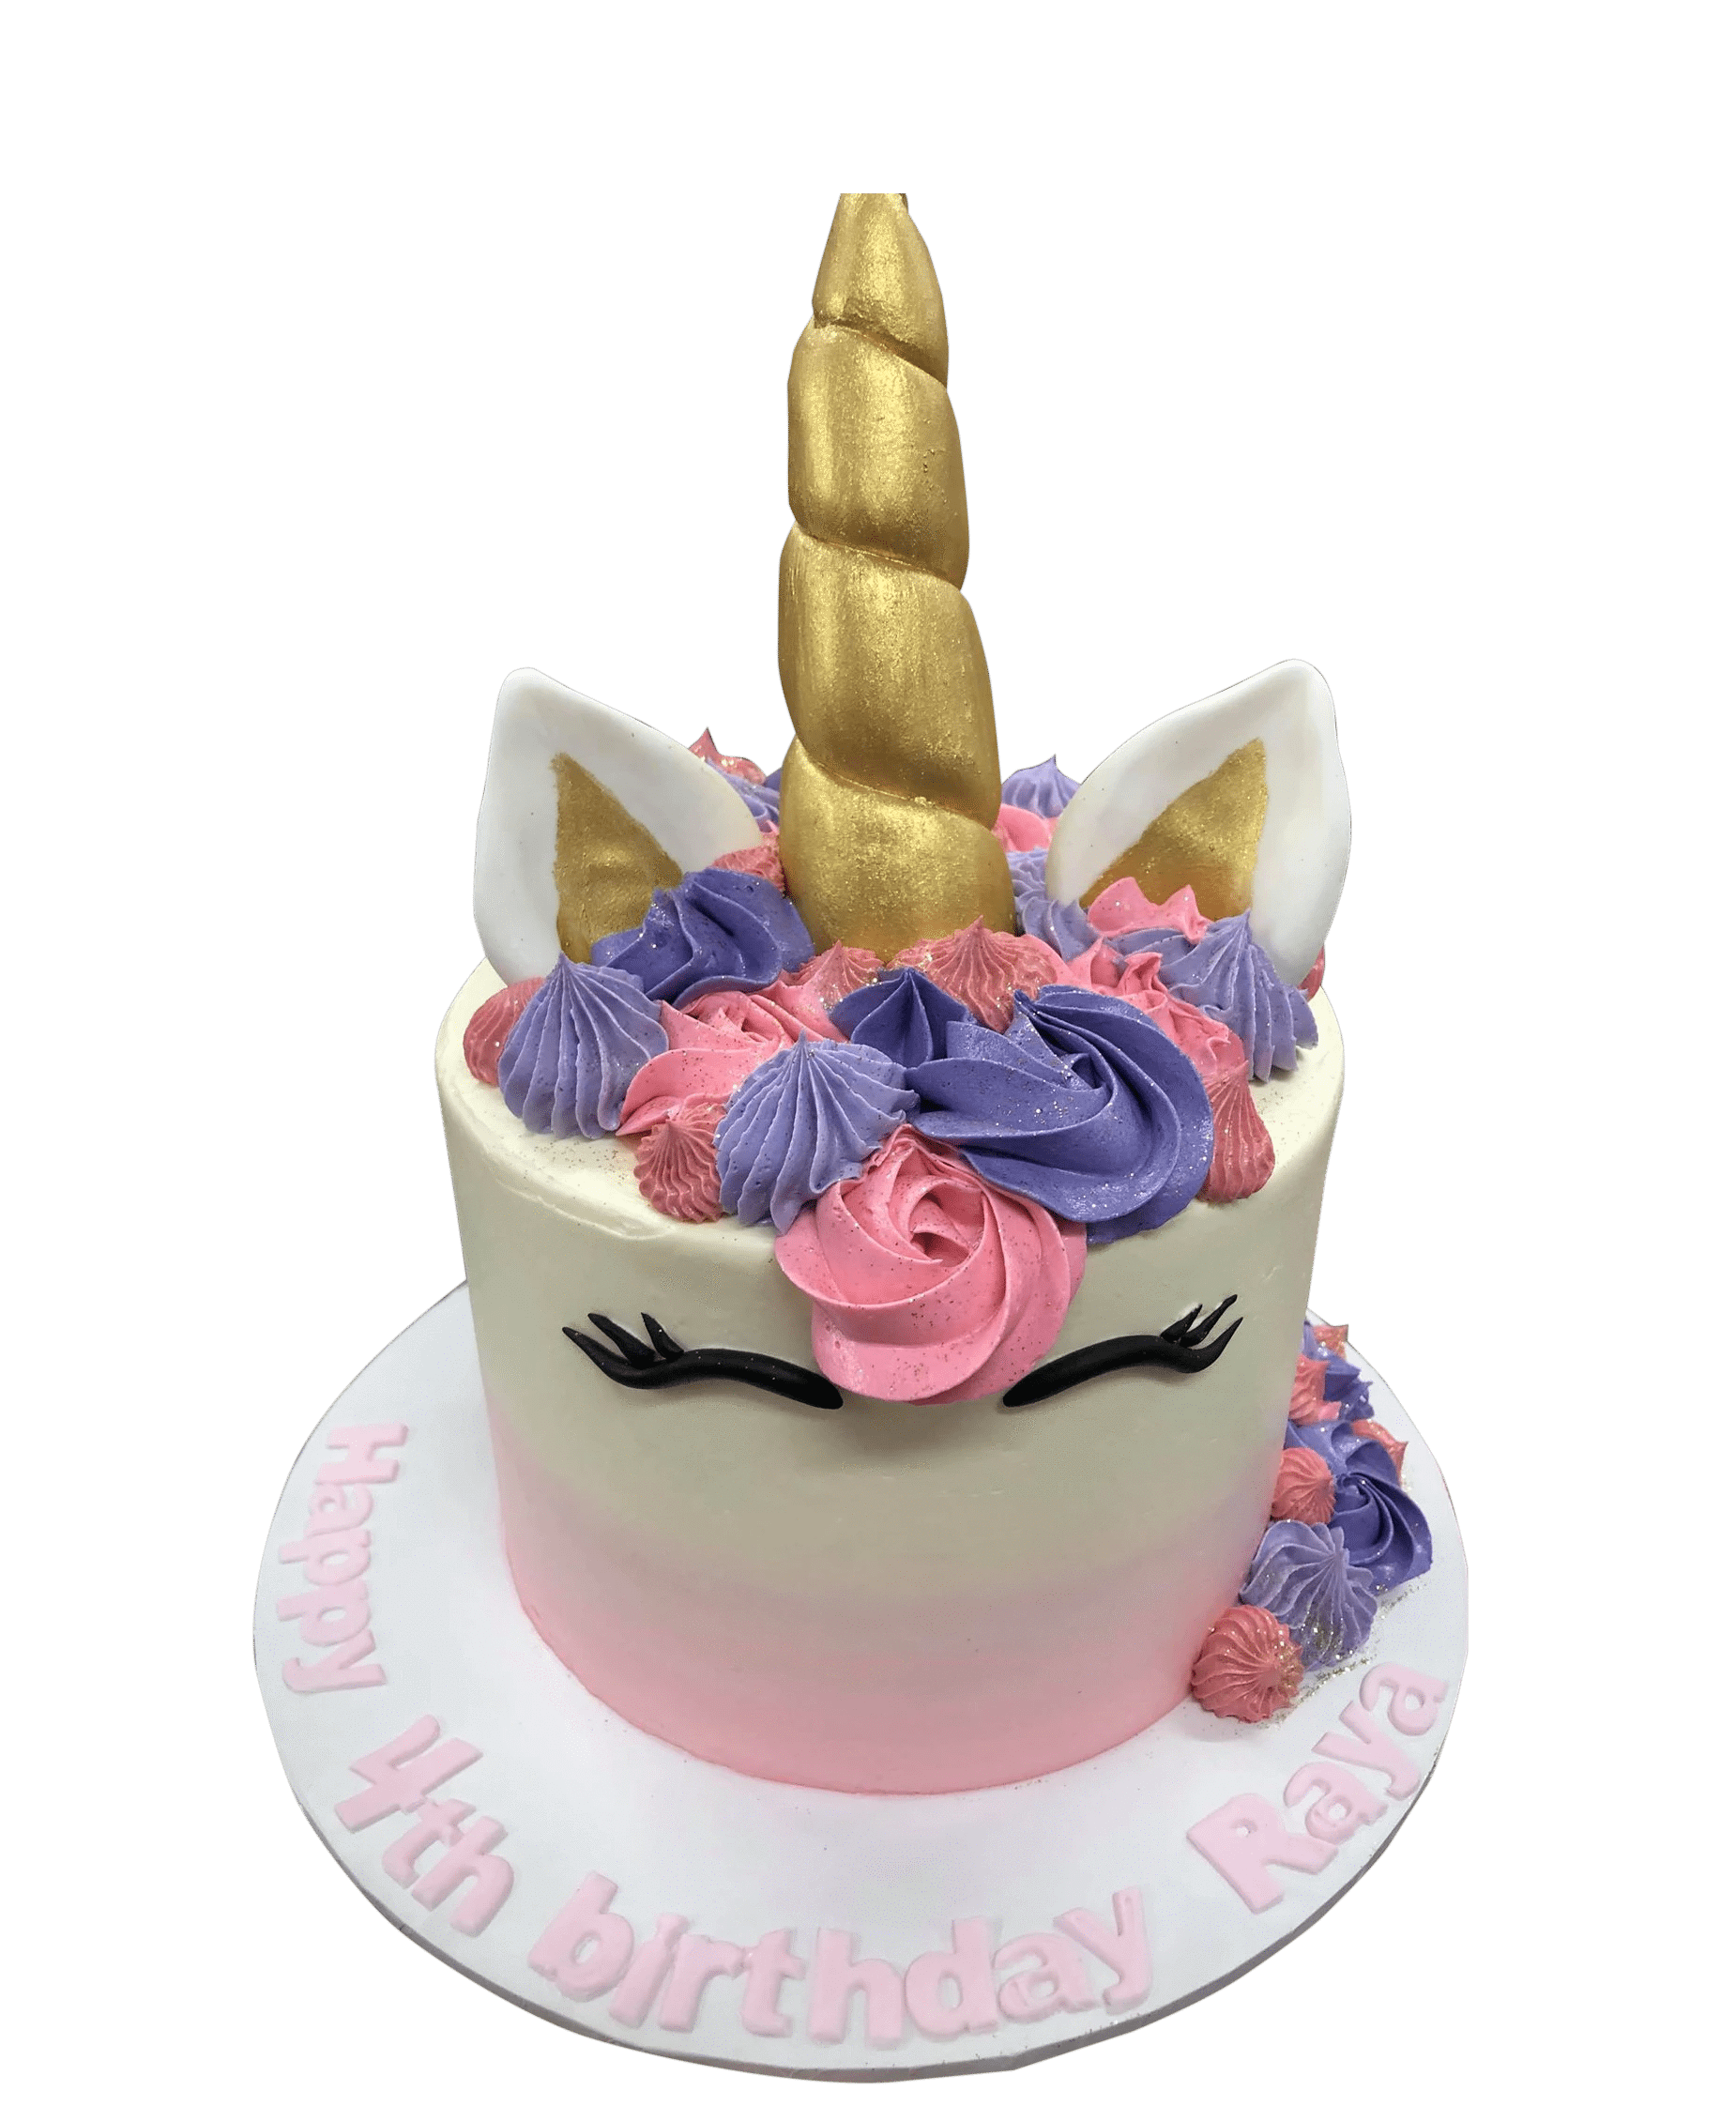 pink and purple birthday cakes